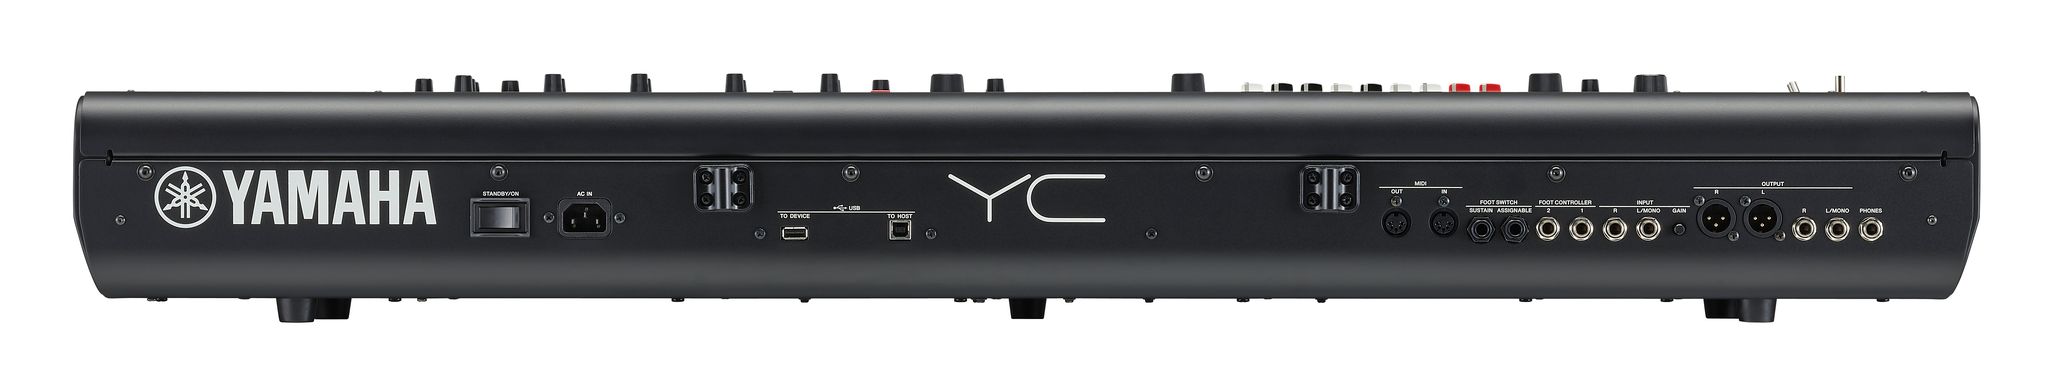 Yamaha Yc 73 - Stage keyboard - Variation 2